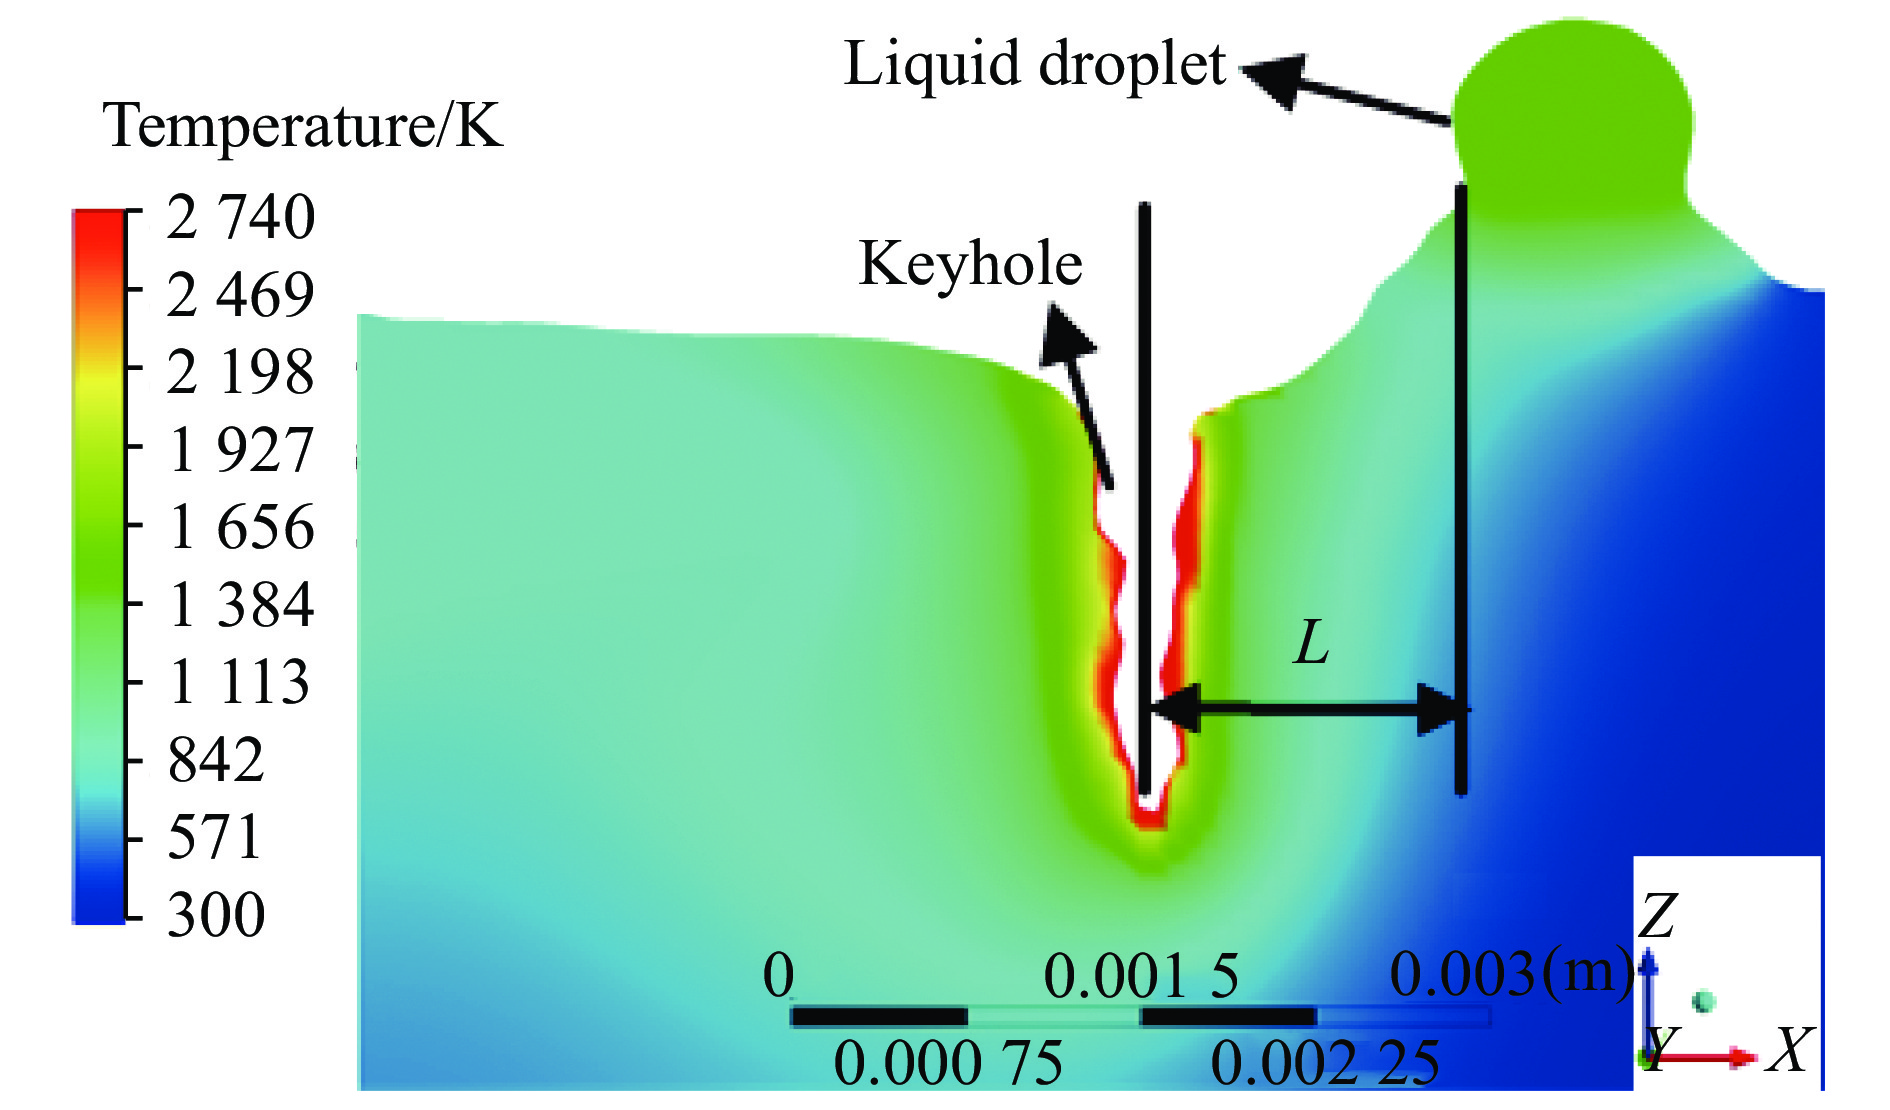 Location of liquid droplet filling